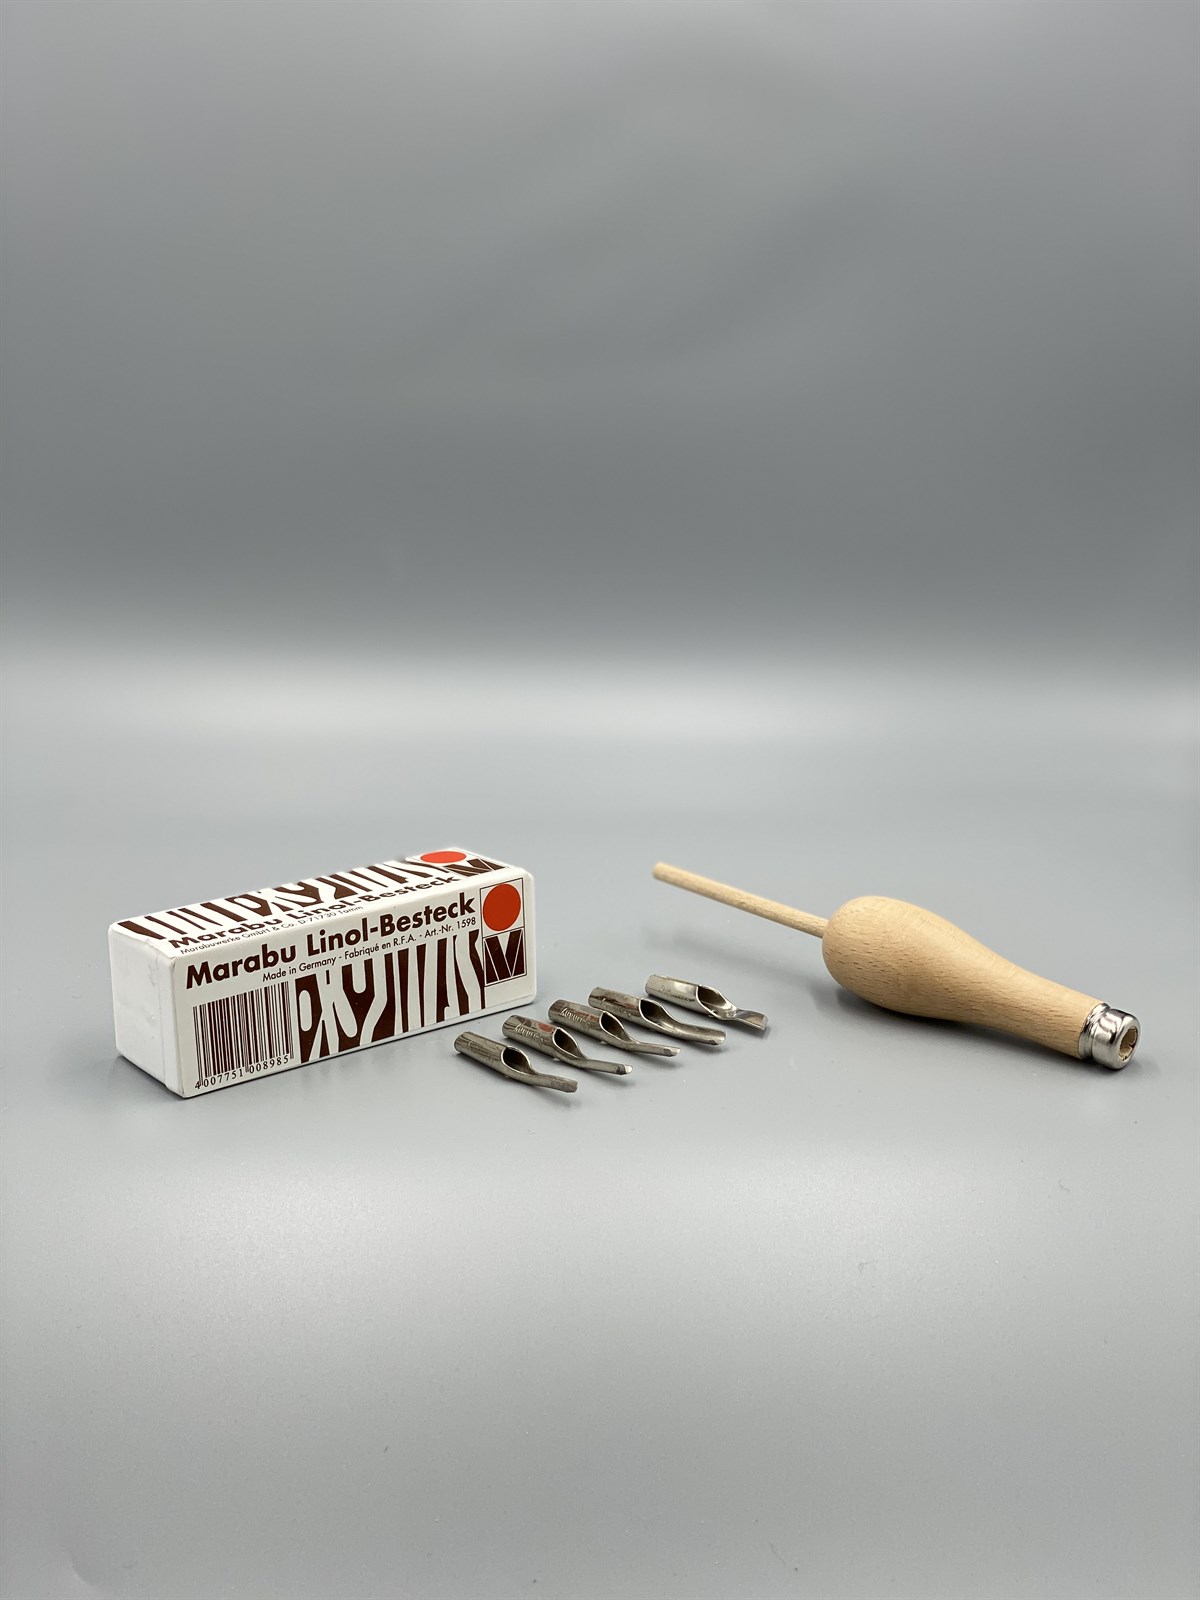 Marabu Linol Oyma Seti 5 Bıçak | emicraft.com